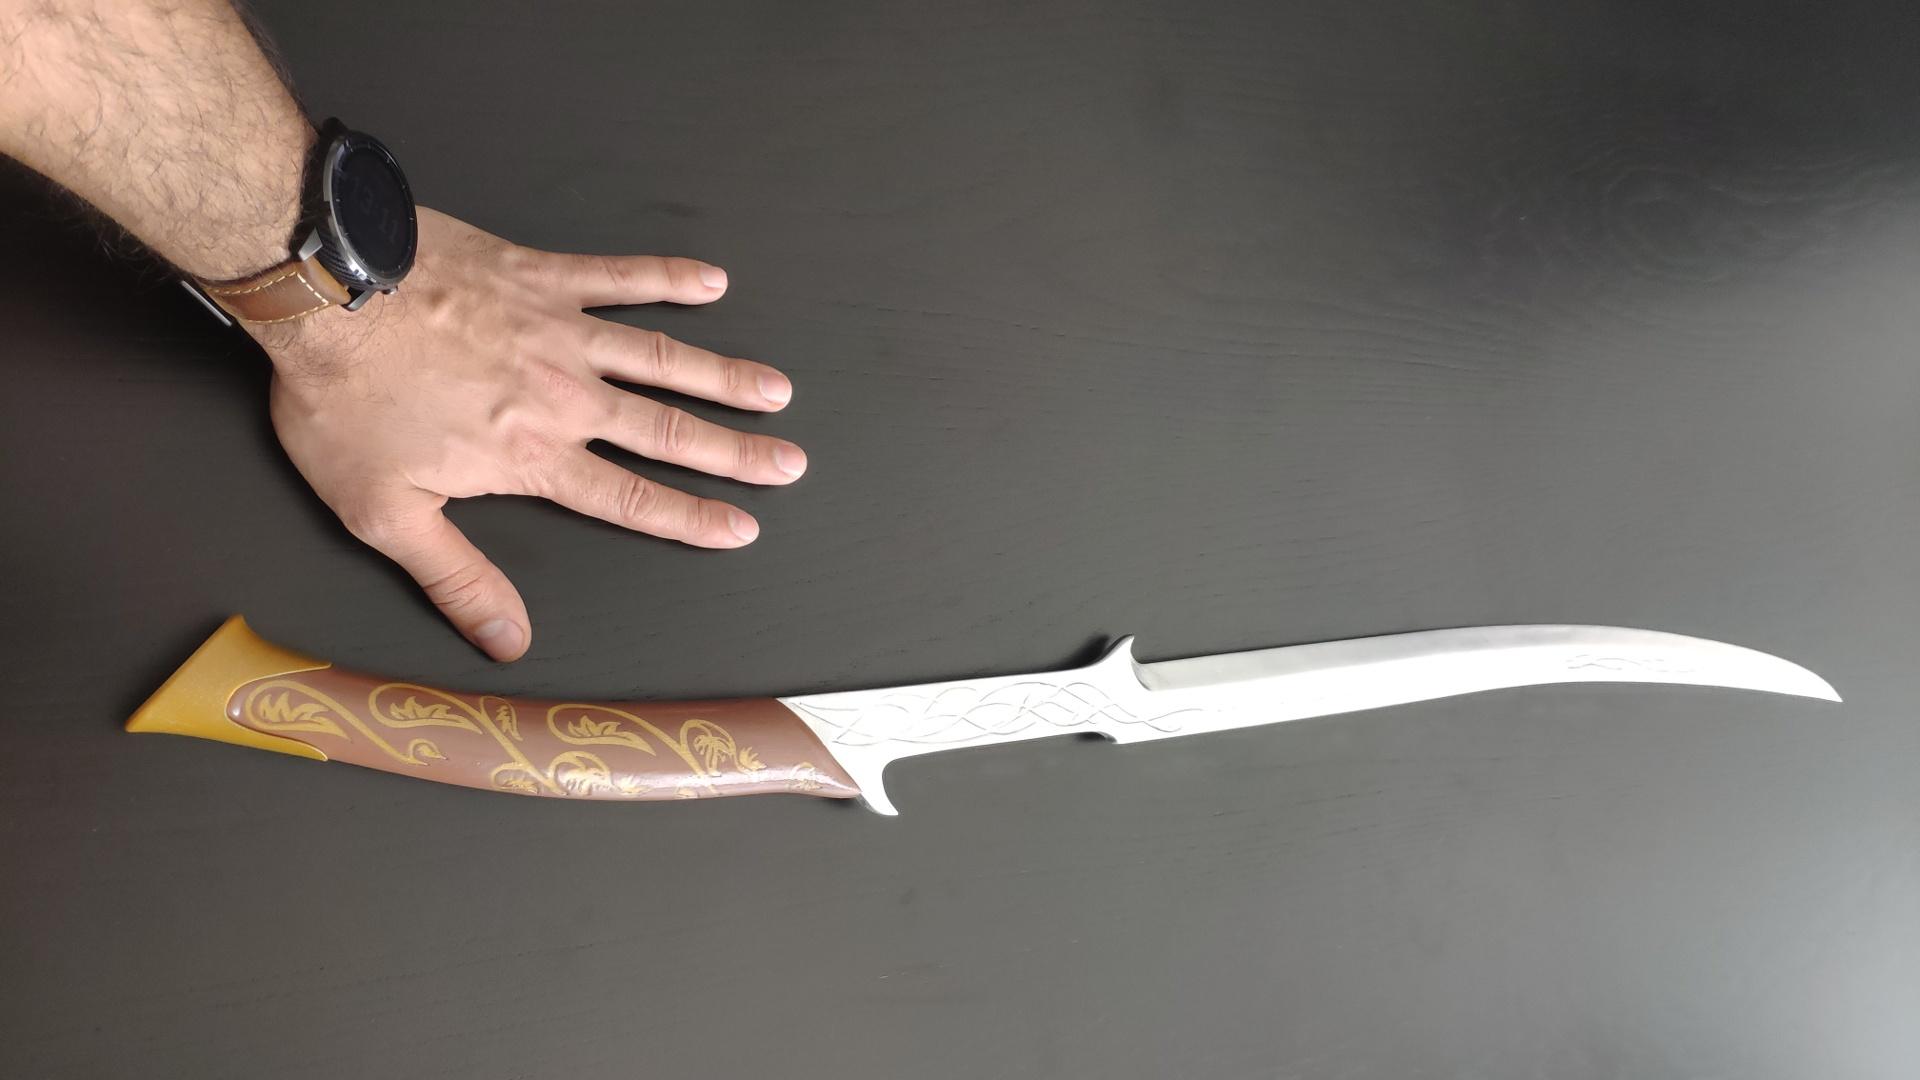 HADHAFANG - Arwen sword FROM LOTR 3d model